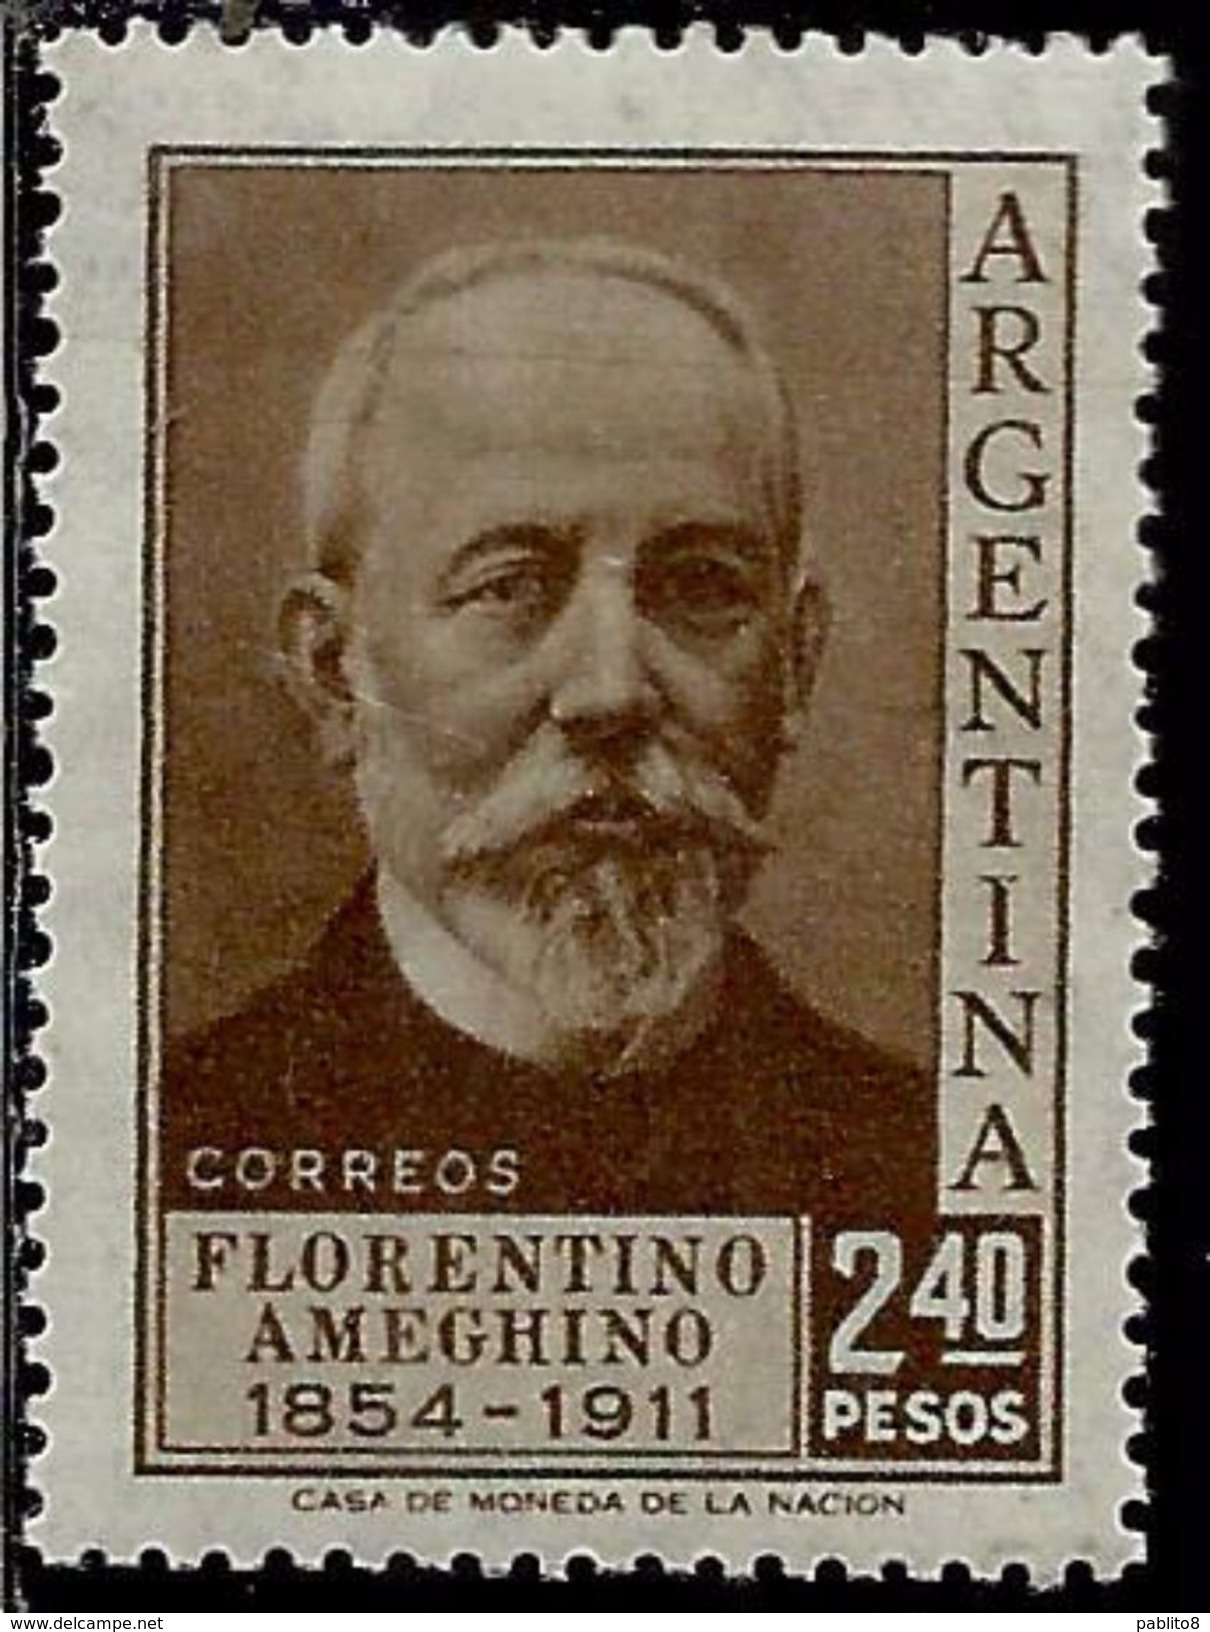 ARGENTINA 1956 Florentino Ameghino Anthropologist. PESOS 2.40p MNH - Nuovi